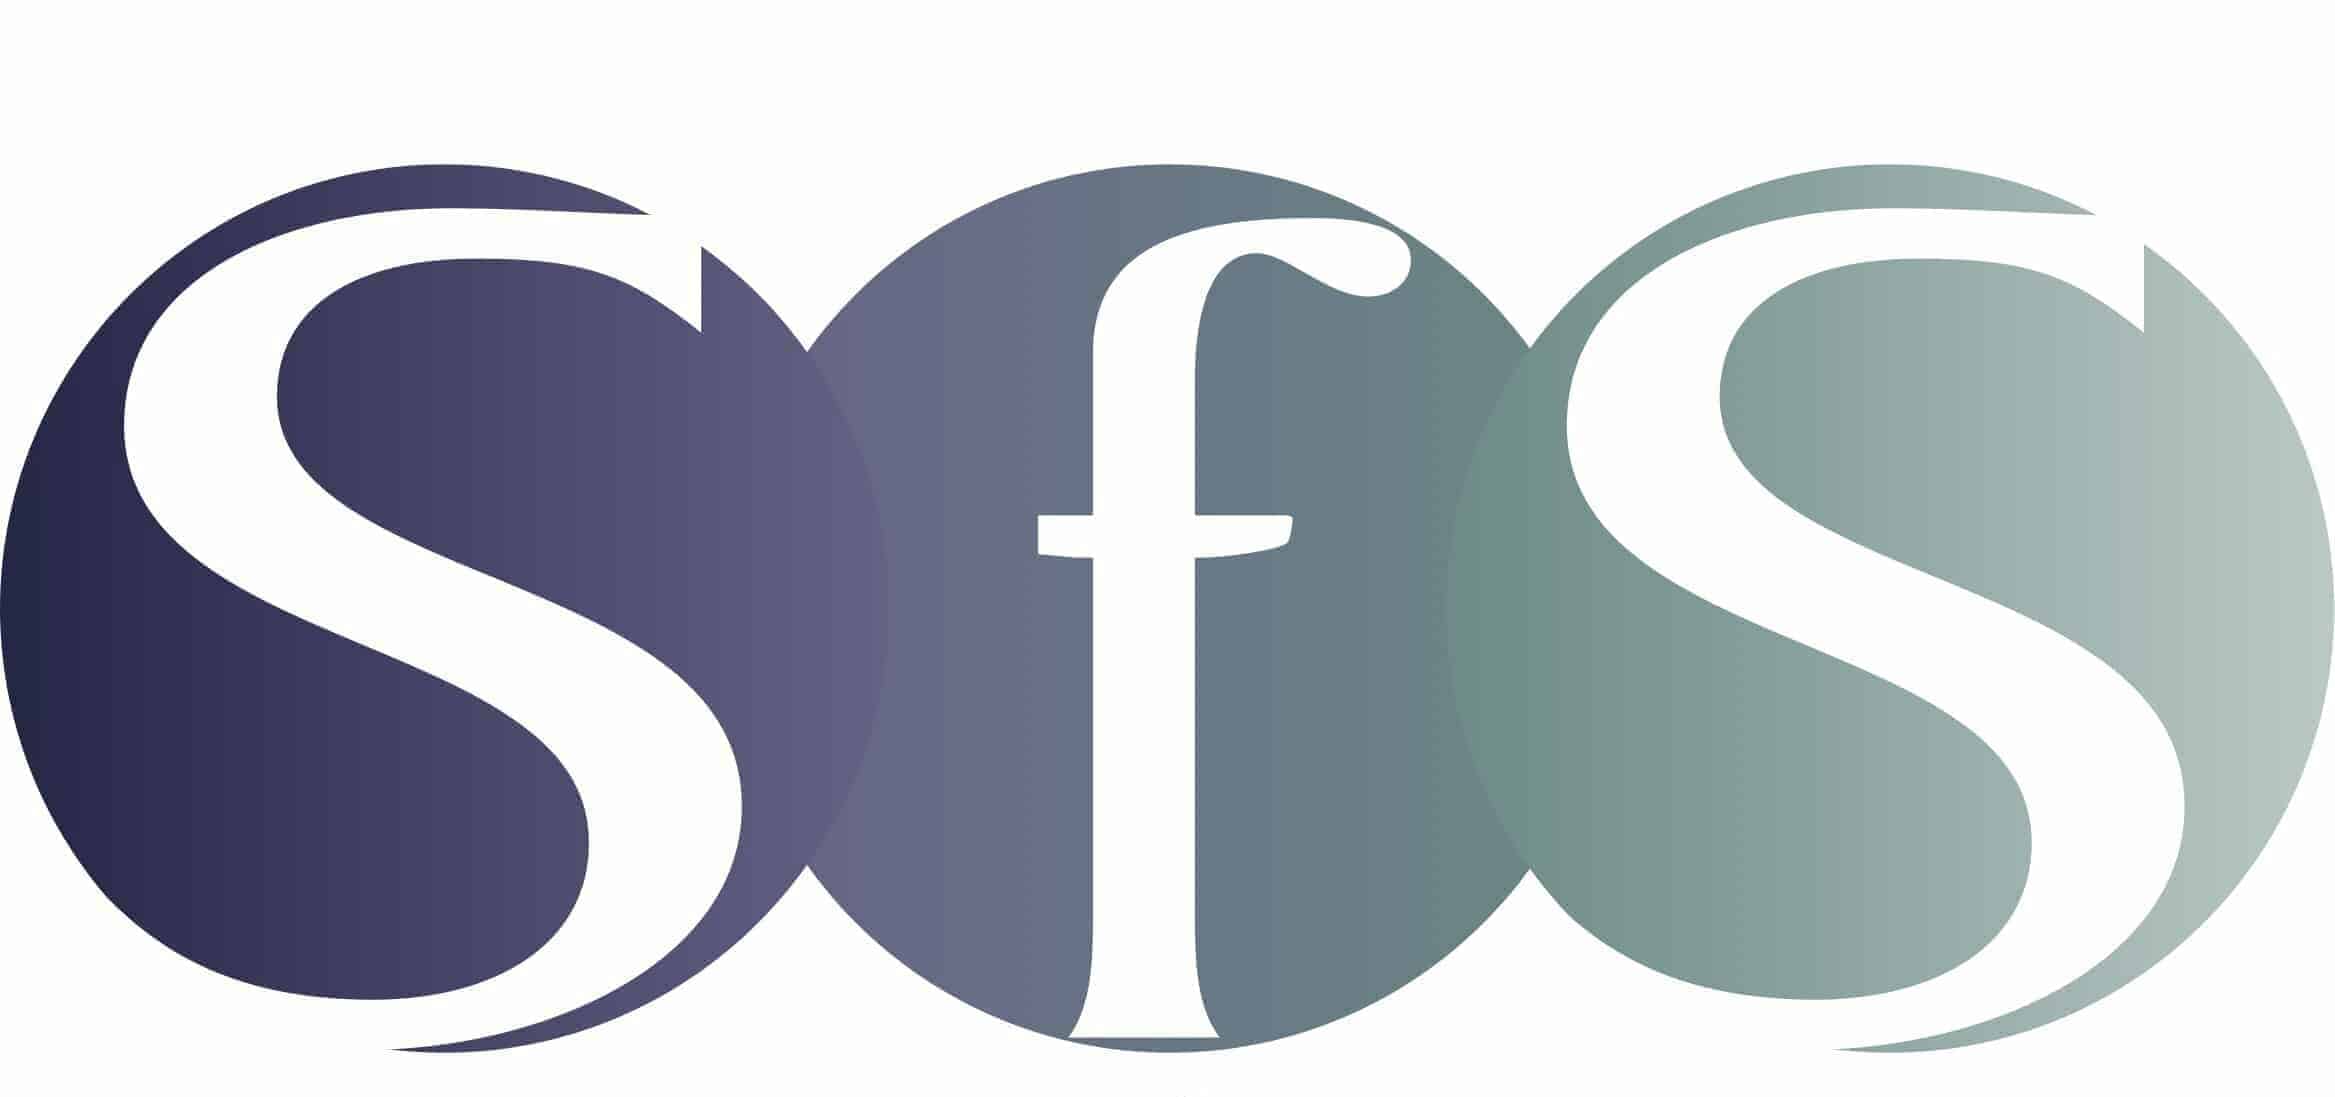 Sfs Logo Design Abstract Geometric Vector Stock Vector (Royalty Free)  2190463955 | Shutterstock